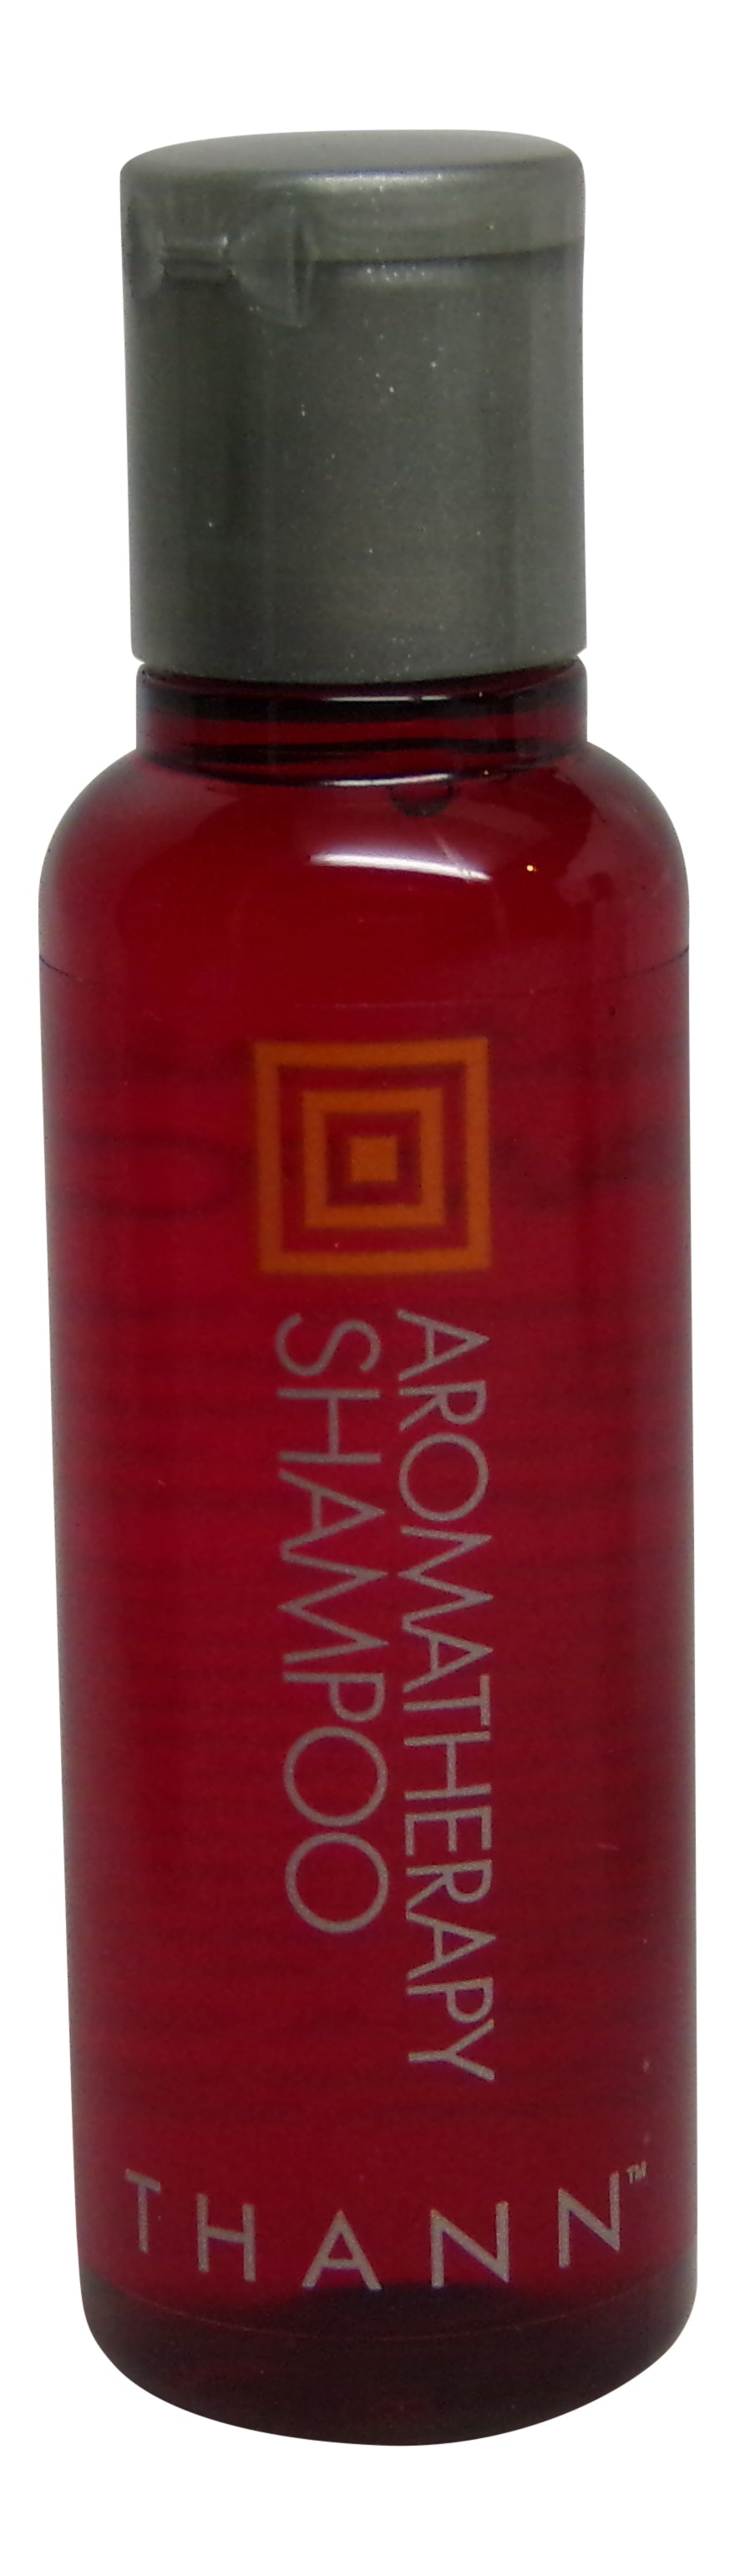 Thann Aromatherapy Shampoo lot of 12ea 1.7oz Bottles. Total of 20.4oz